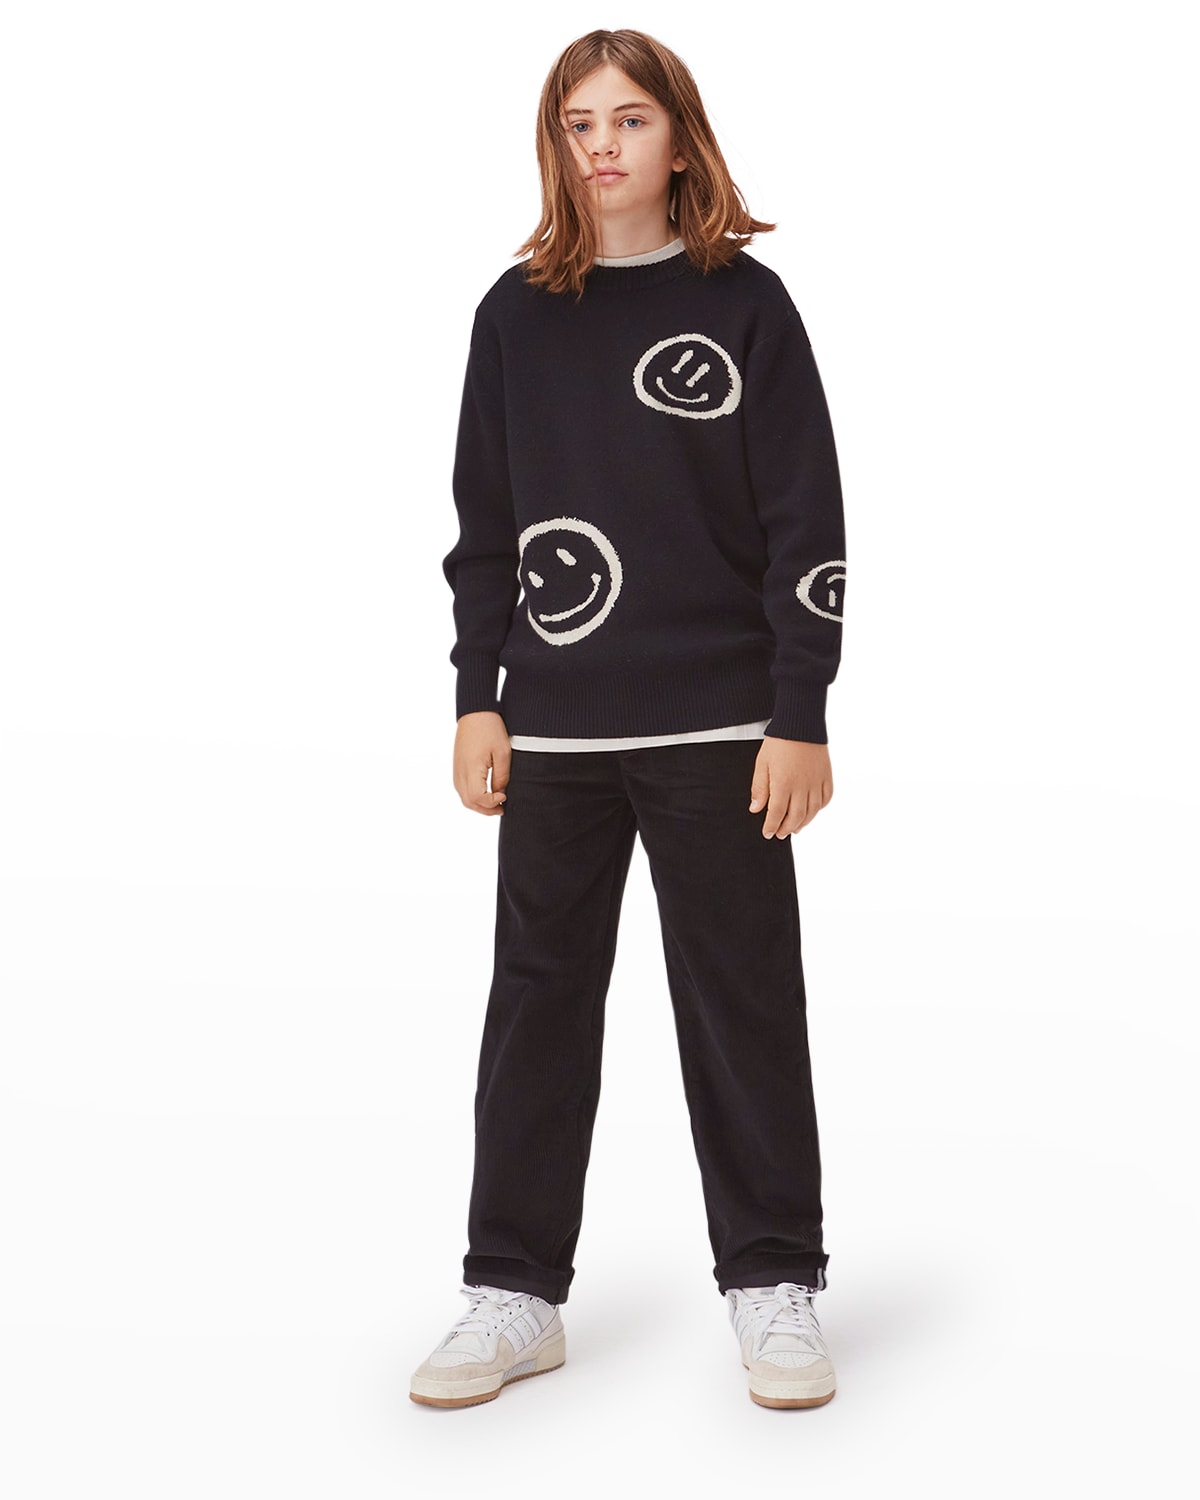 Boy's Bello Smileys Cotton/Wool Sweater, Size 4-6